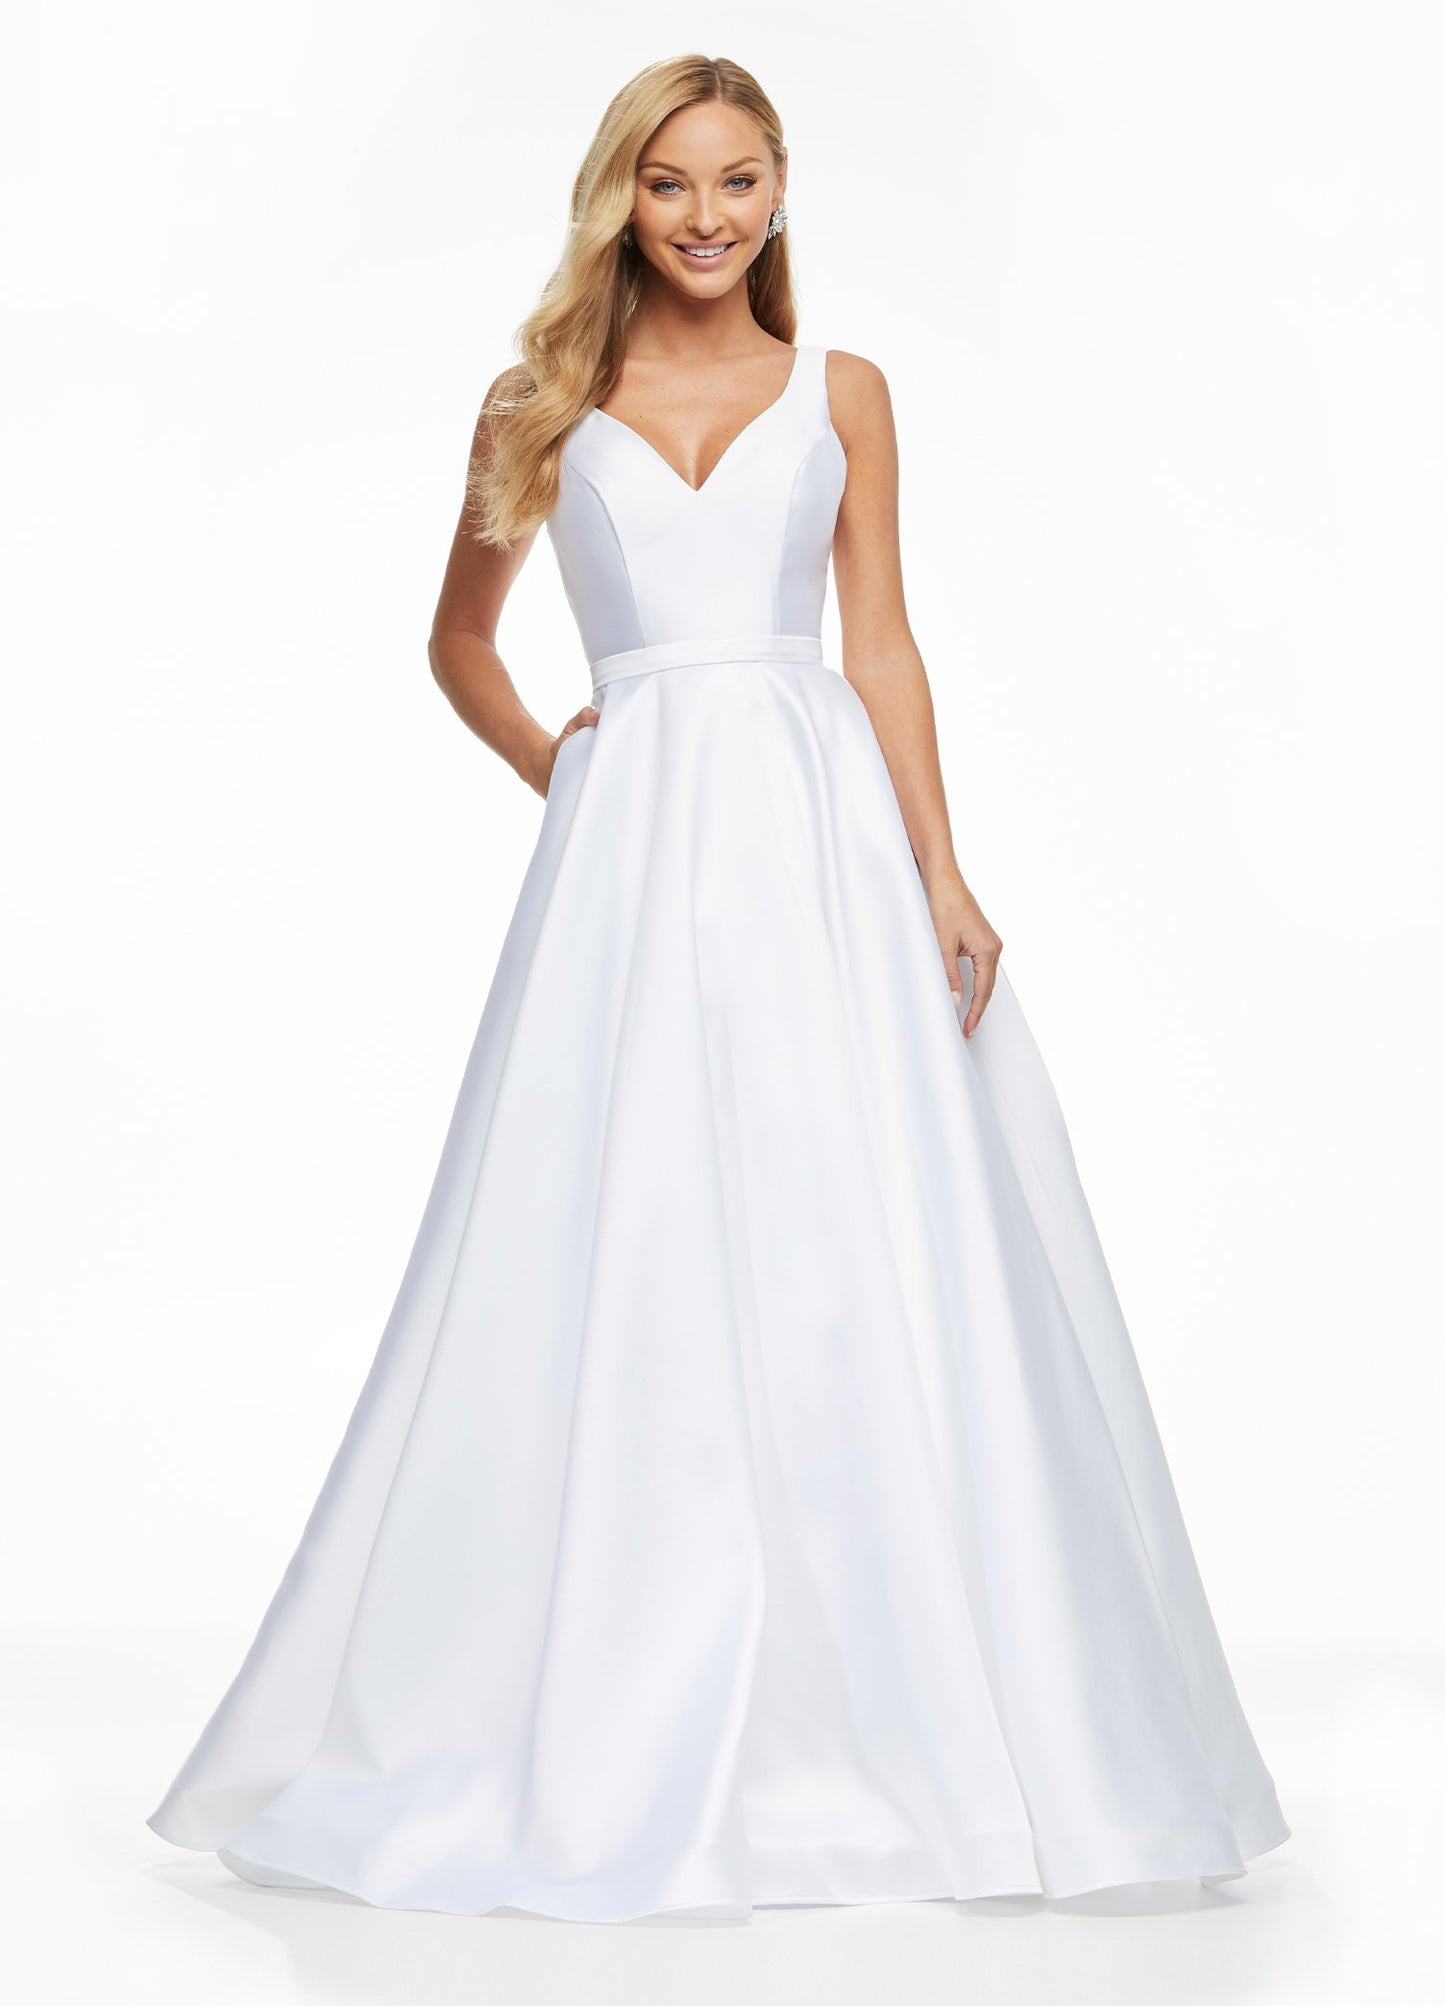 HSMQHJWE White Bridal Shower Dress Prom Ball Gown Womens Satin